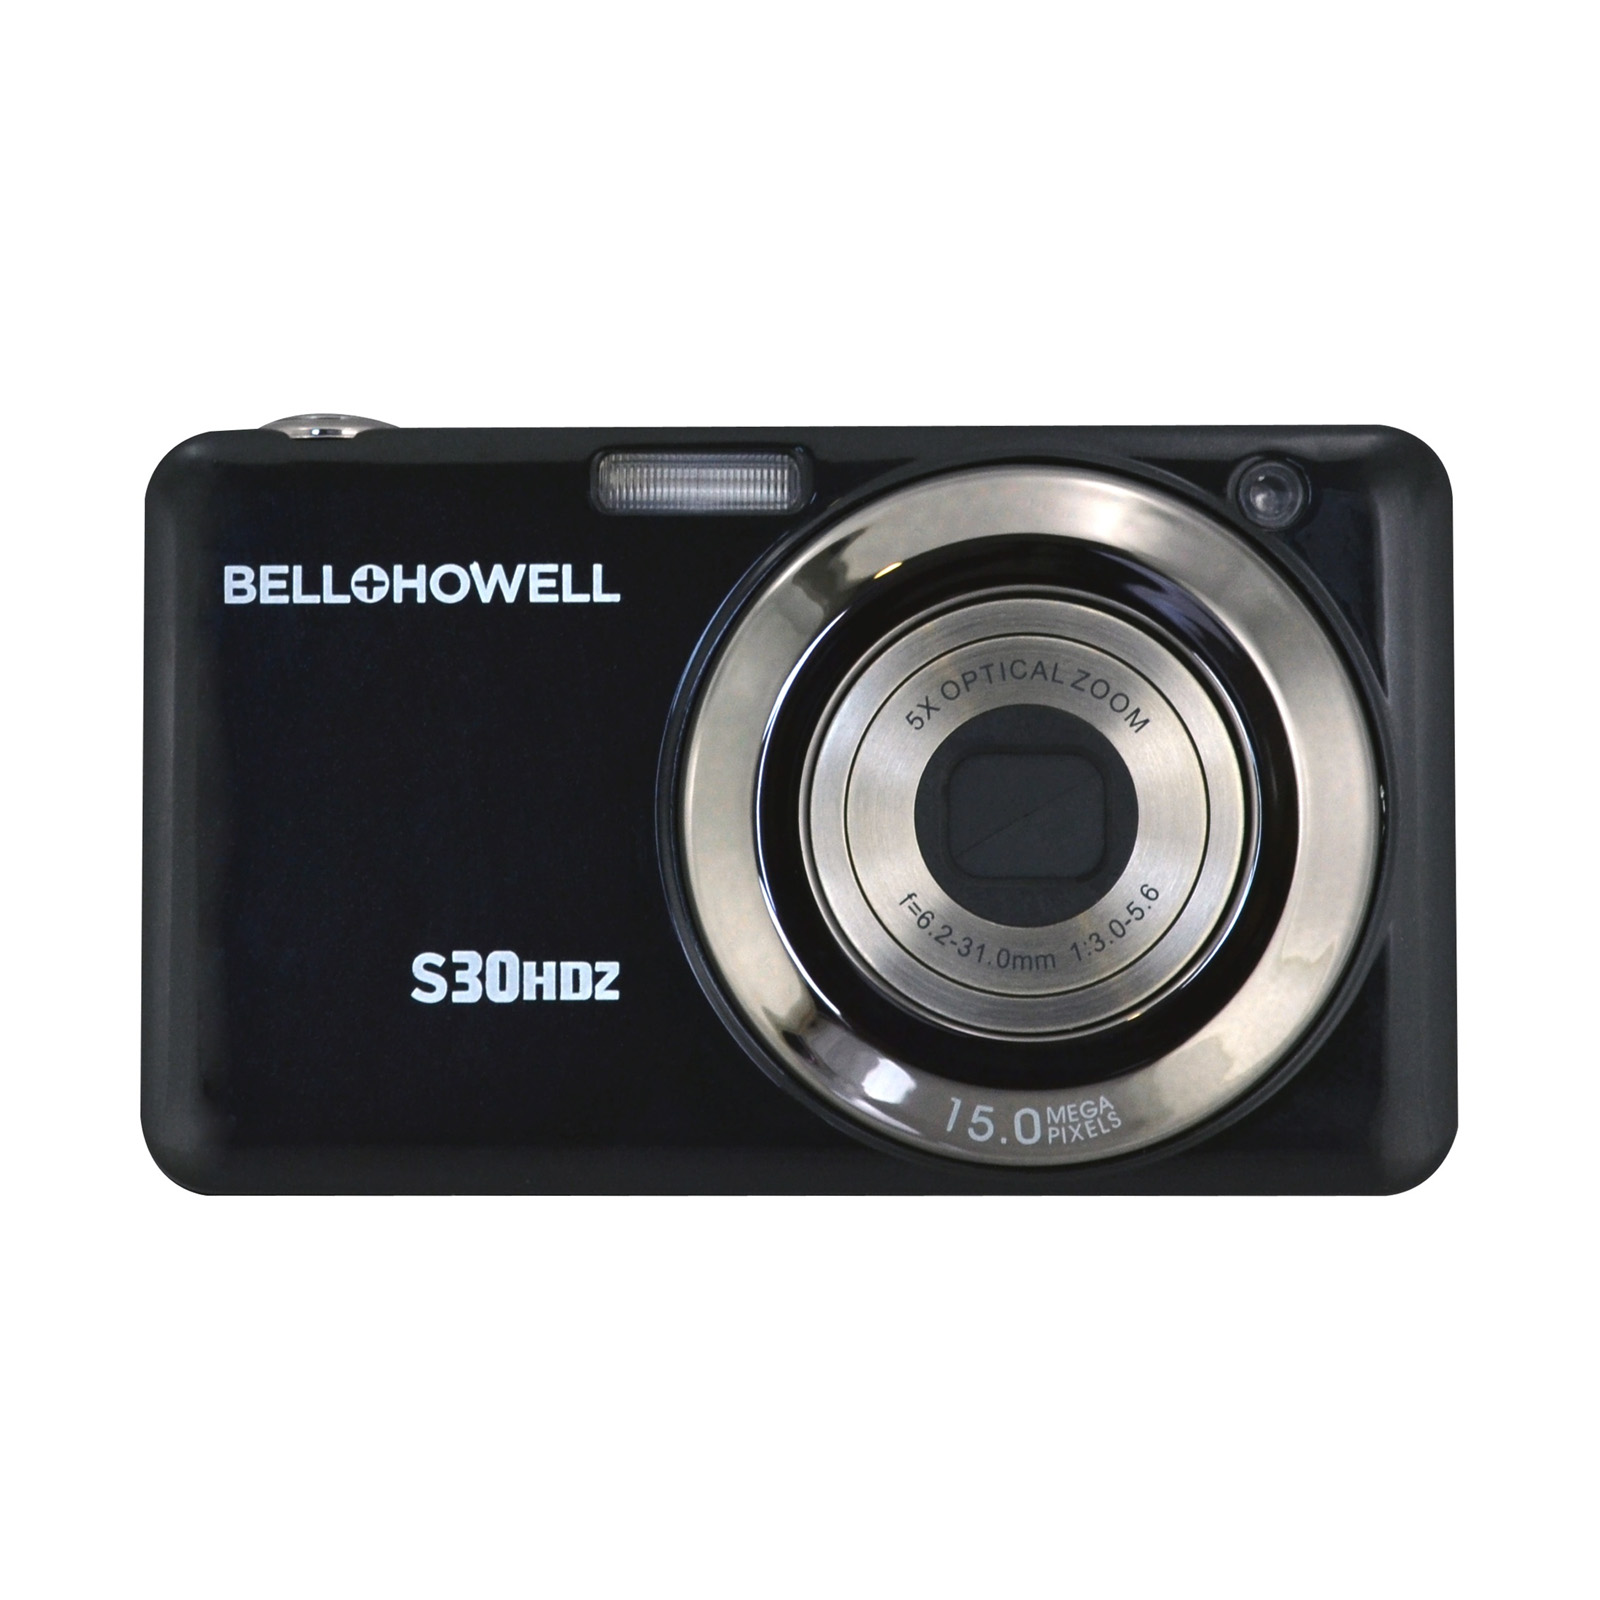 Bell+howell 15MP Digital Camera w/5x Optical Zoom & HD Video (Black)